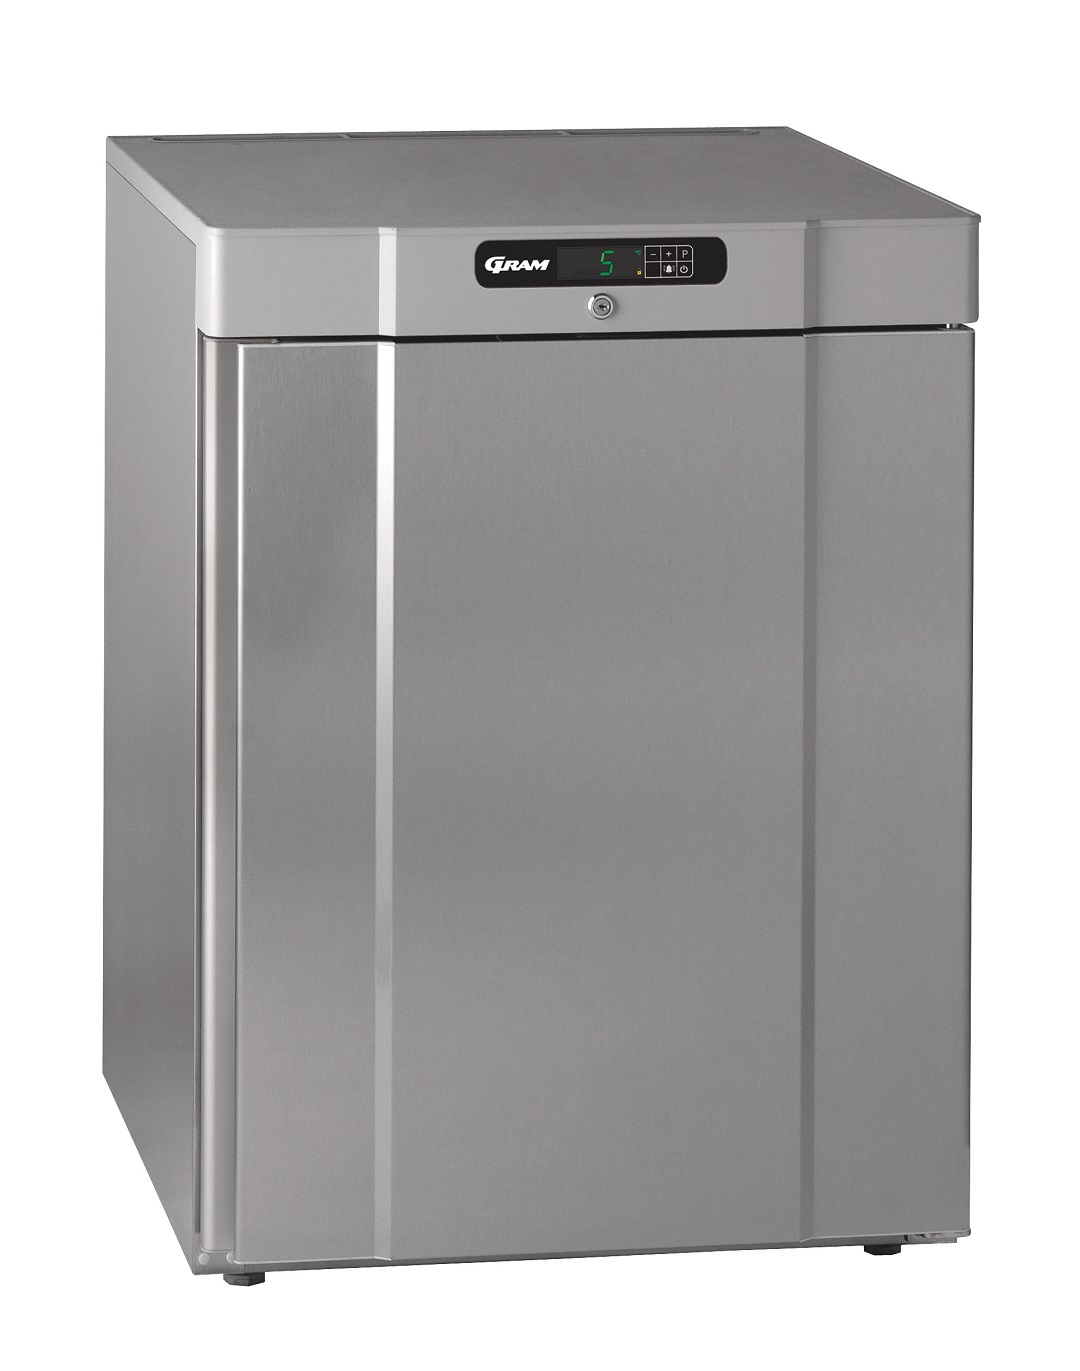 Gram Compact K 220 RG Undercounter Refrigerator (962200441)